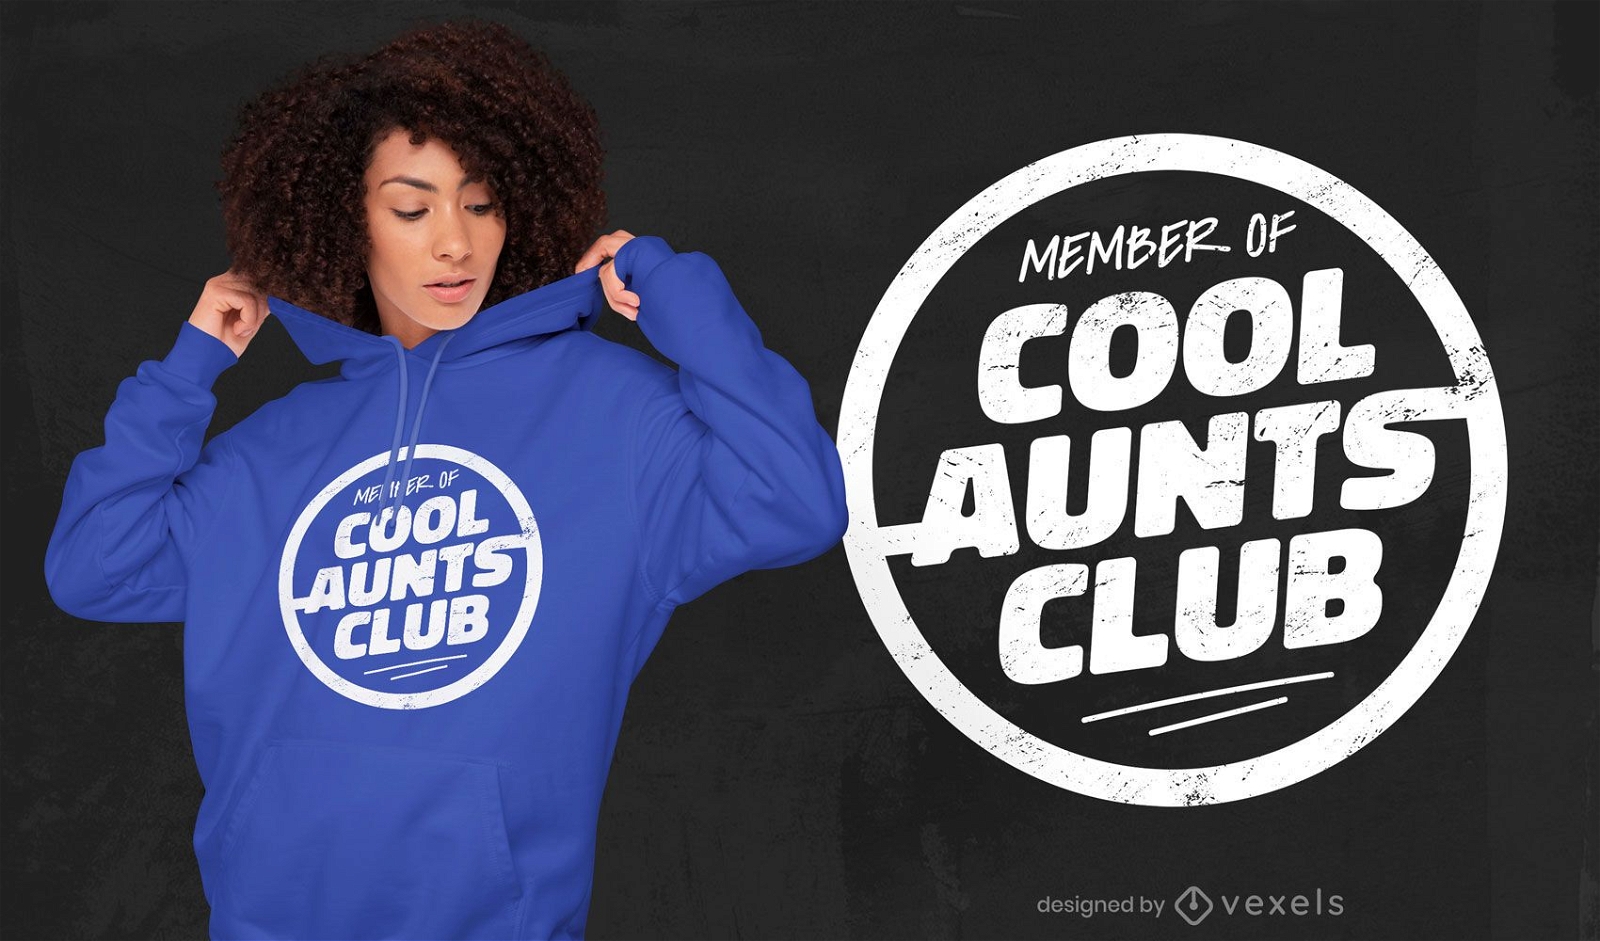 Cool aunts club badge t-shirt design